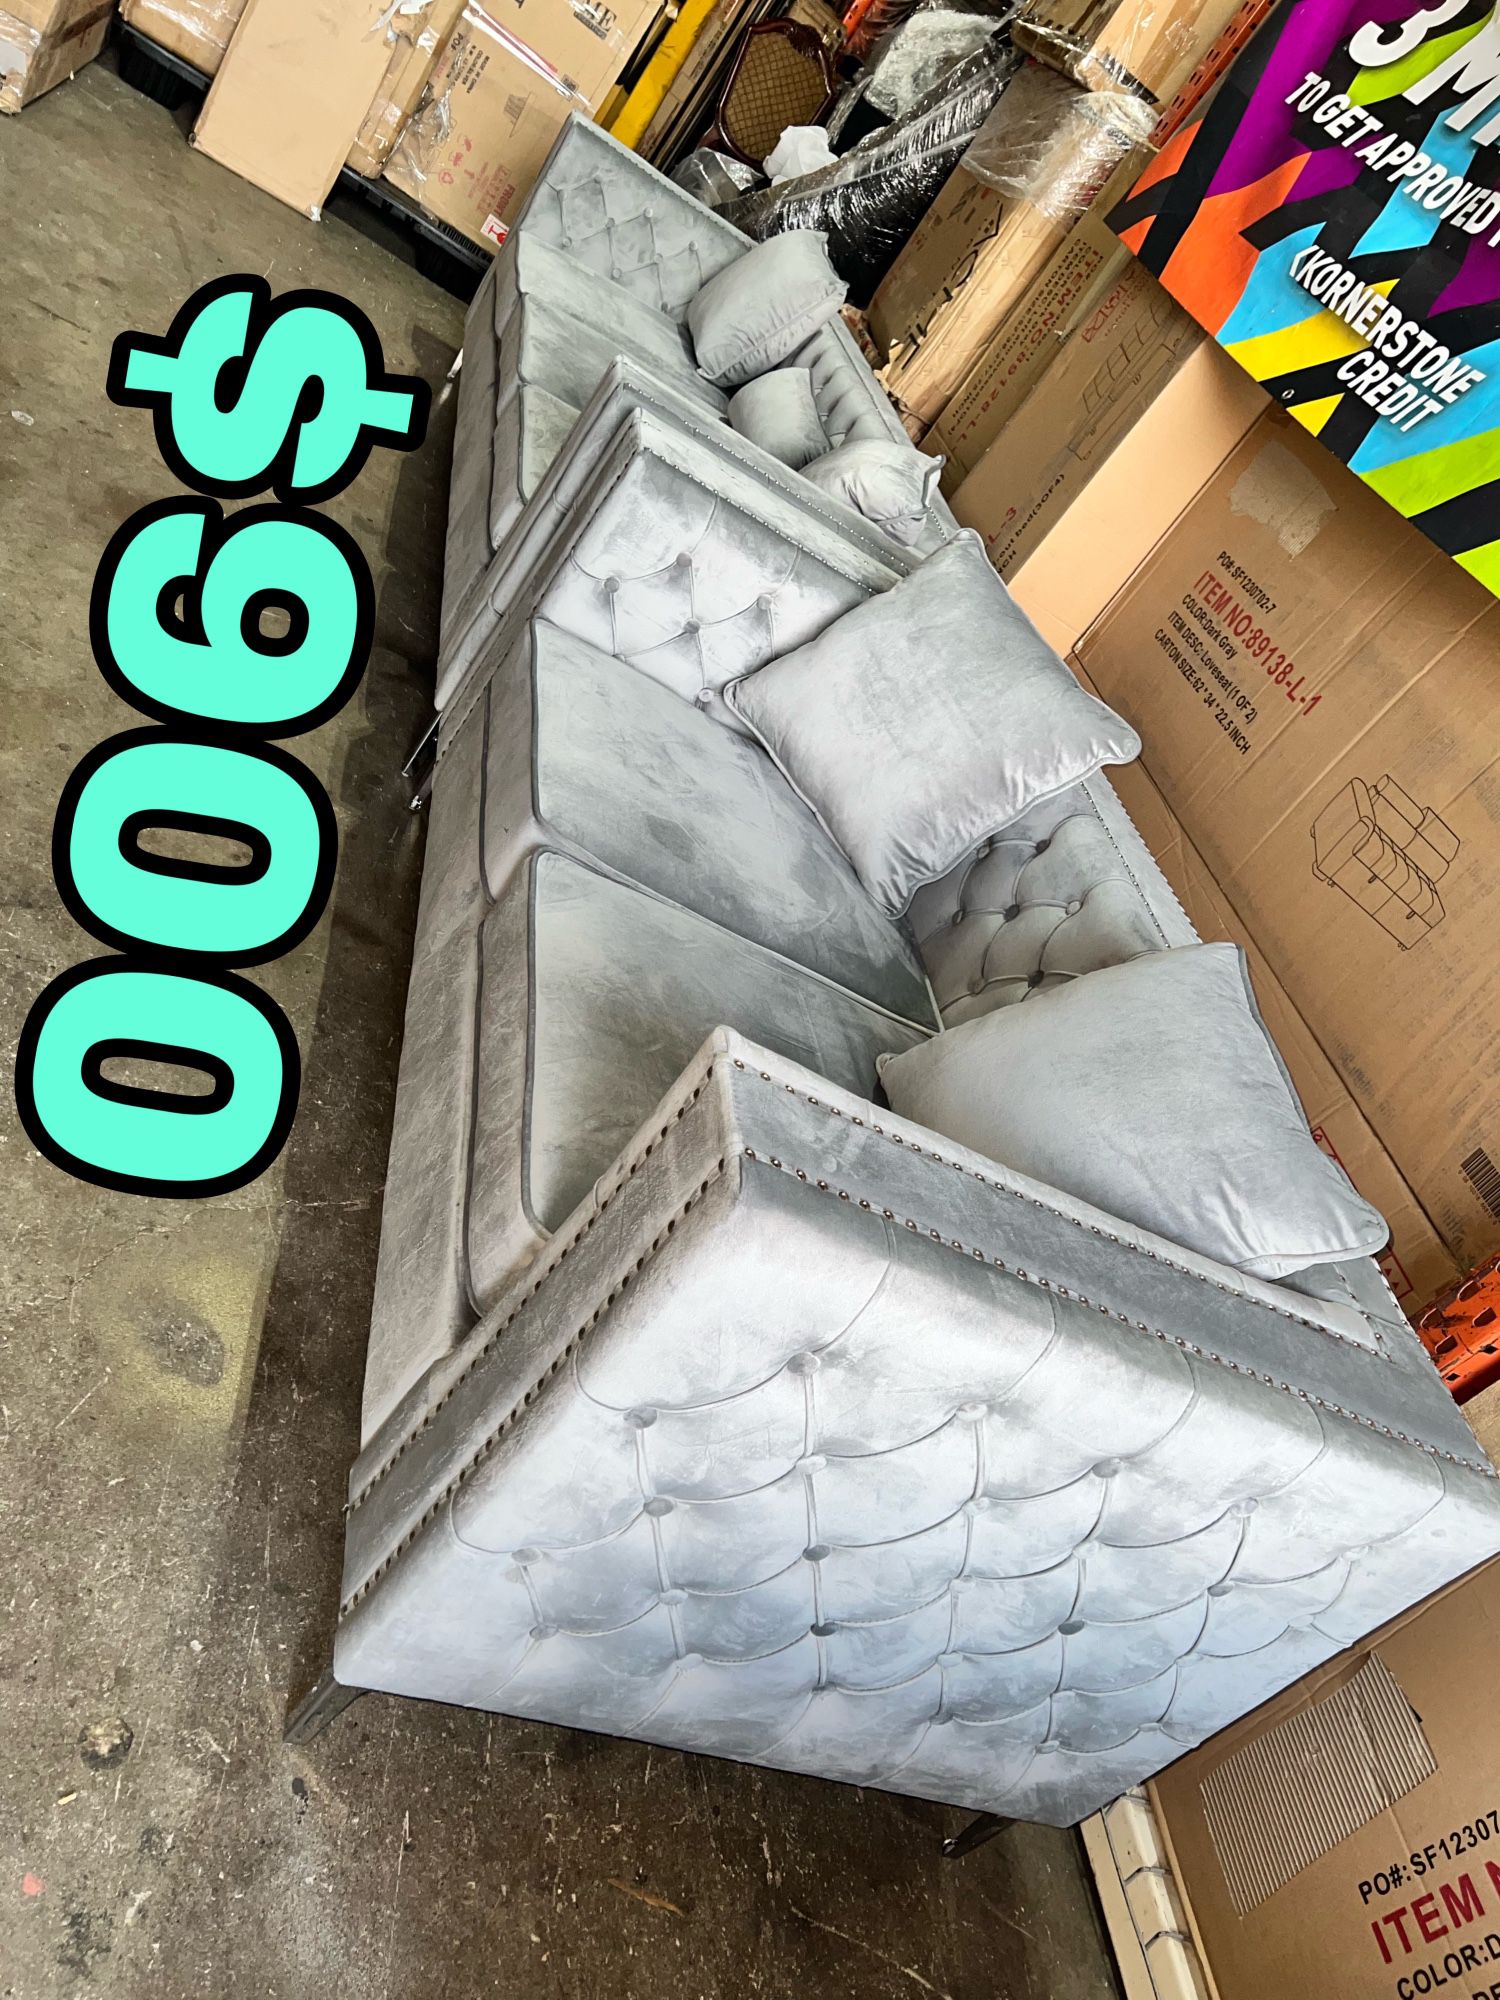 Beautiful New 2PC Tufted Sofa Set(1 Sofa & 1 Loveseat) in Gray Velvet Only $900!!!